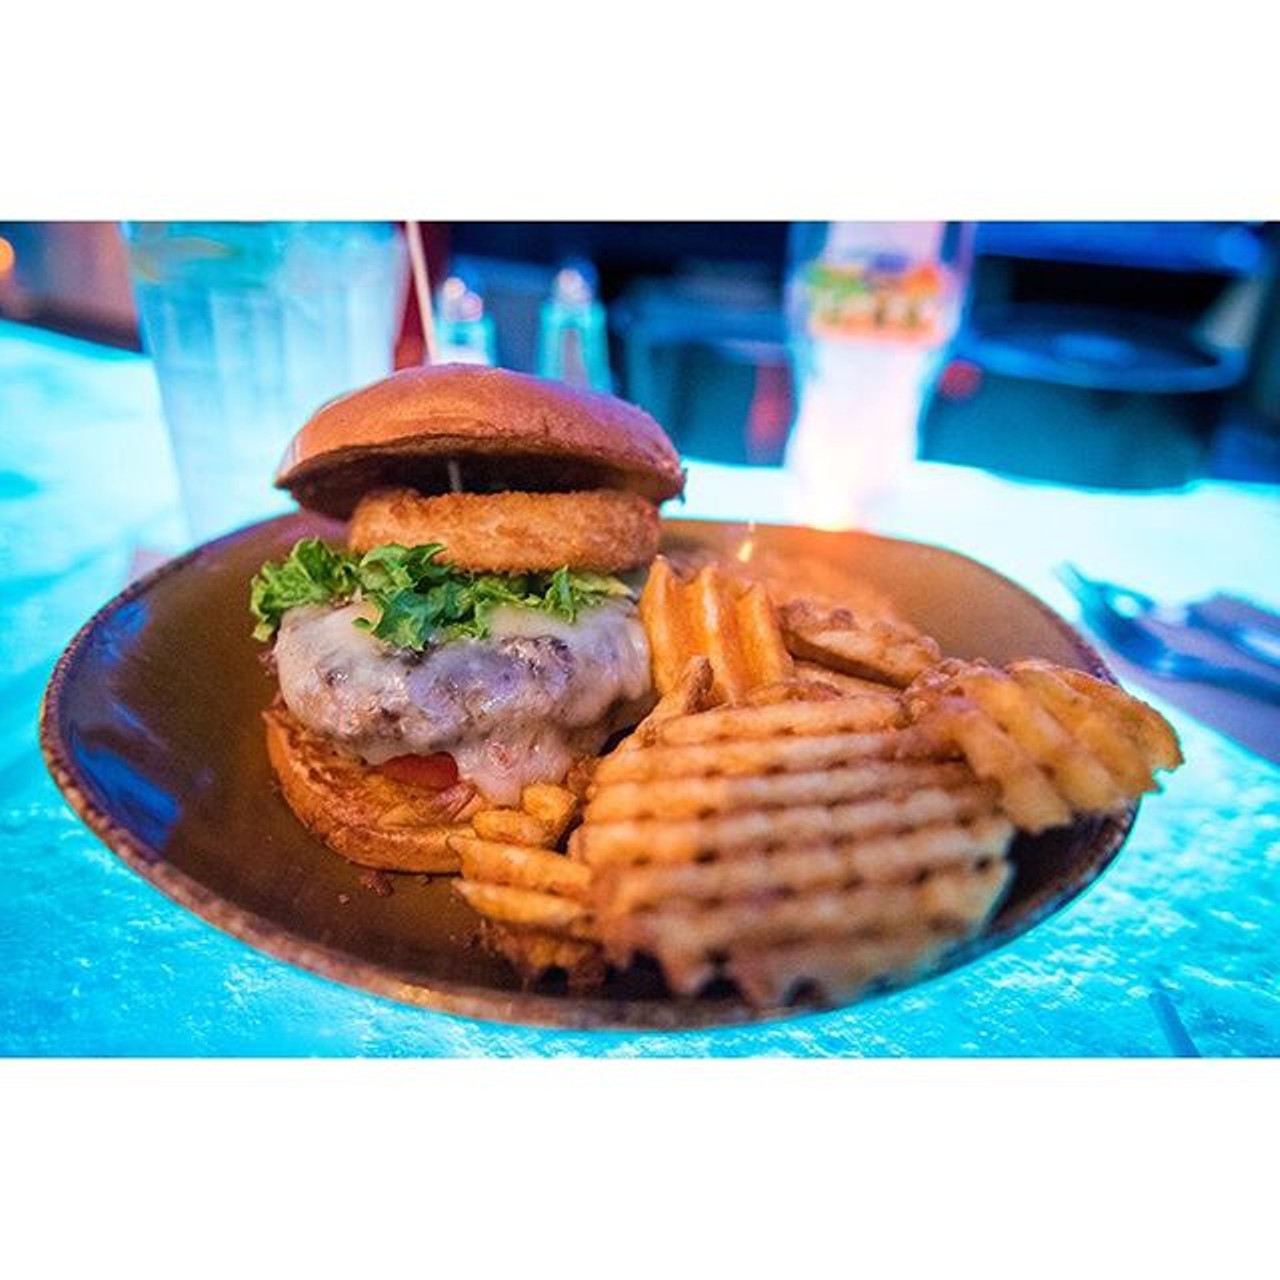 Sandwich and waffle fries at Disney Spring's T-REX Restaurant.
Photo via @brandon_blogs